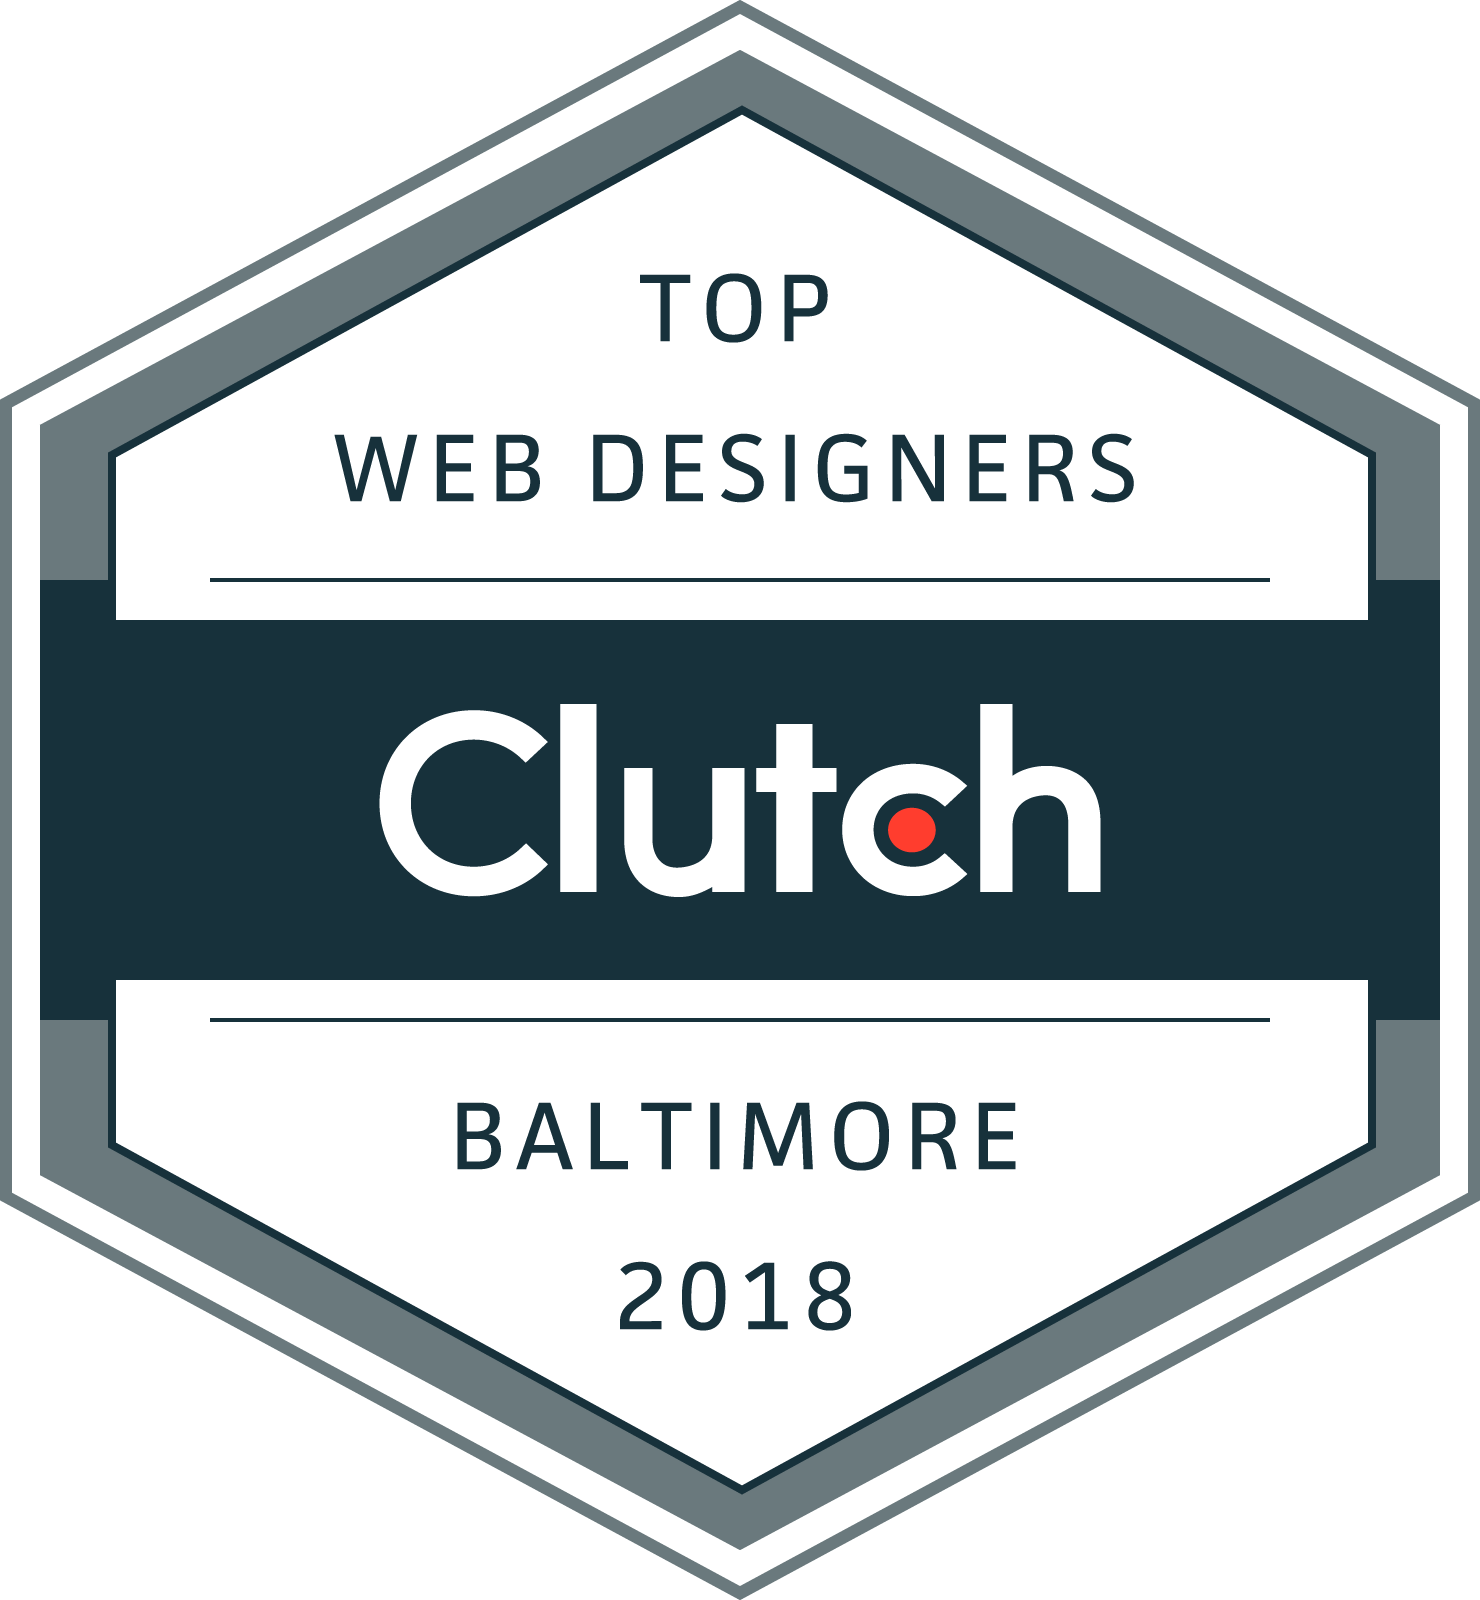 Clutch Top Web Designers Baltimore 2018